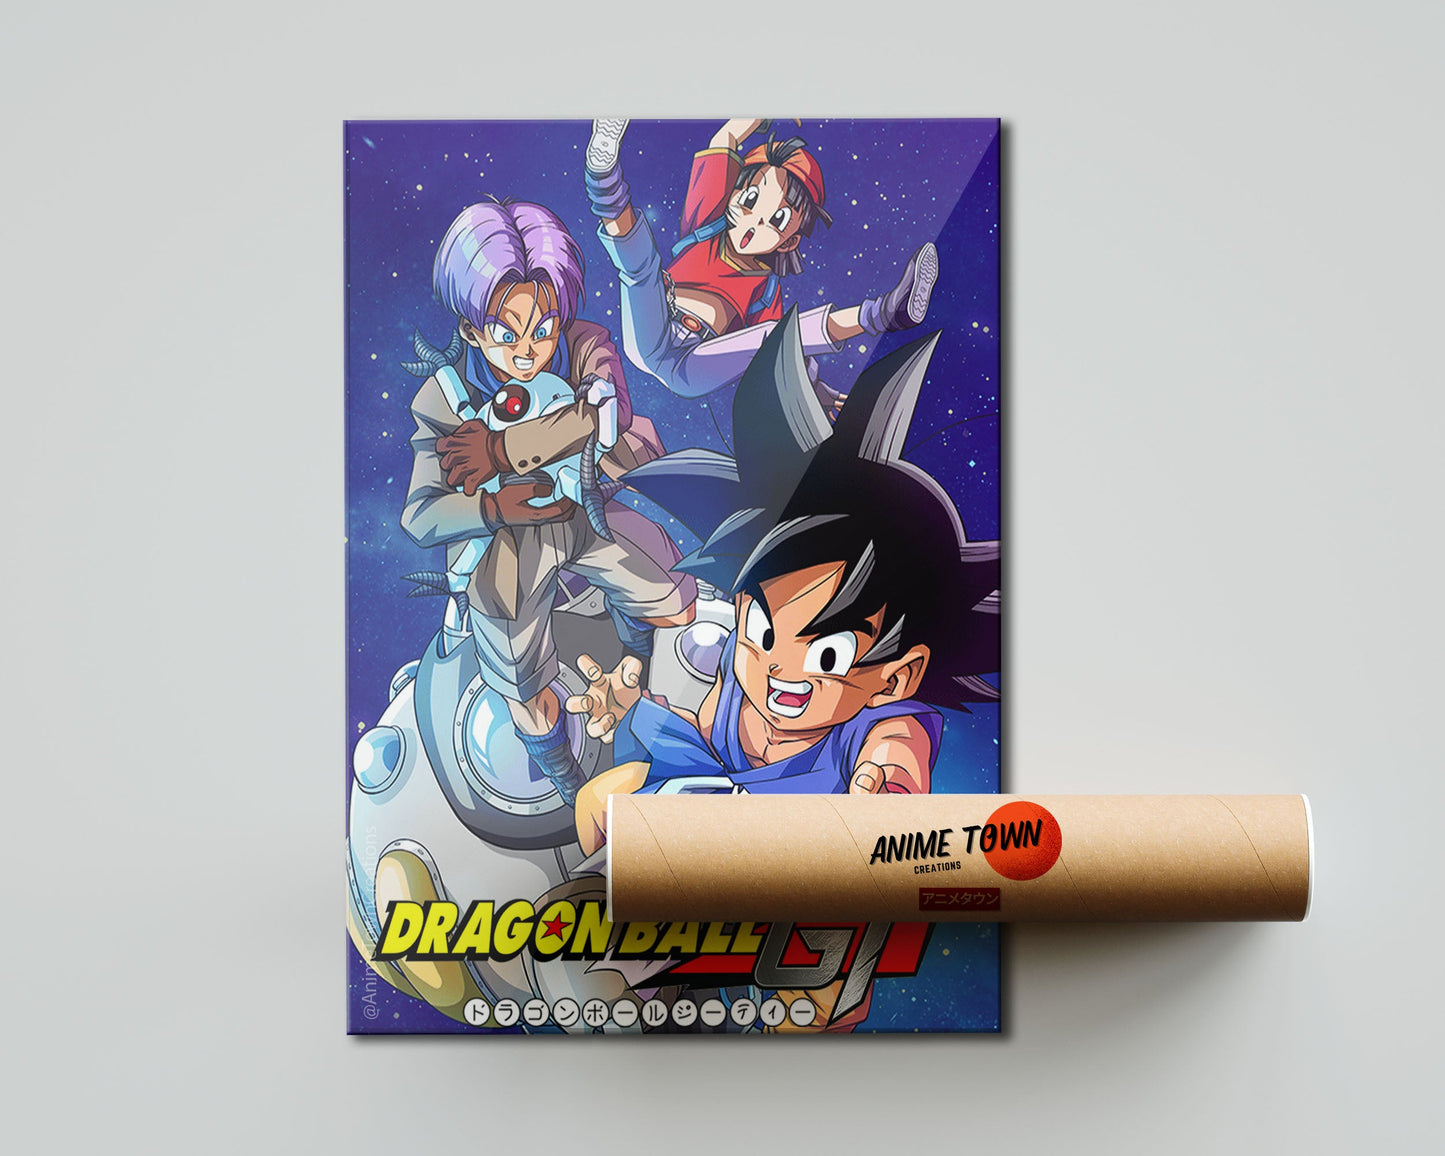 Anime Town Creations Poster Dragon Ball GT 5" x 7" Home Goods - Anime Dragon Ball Poster